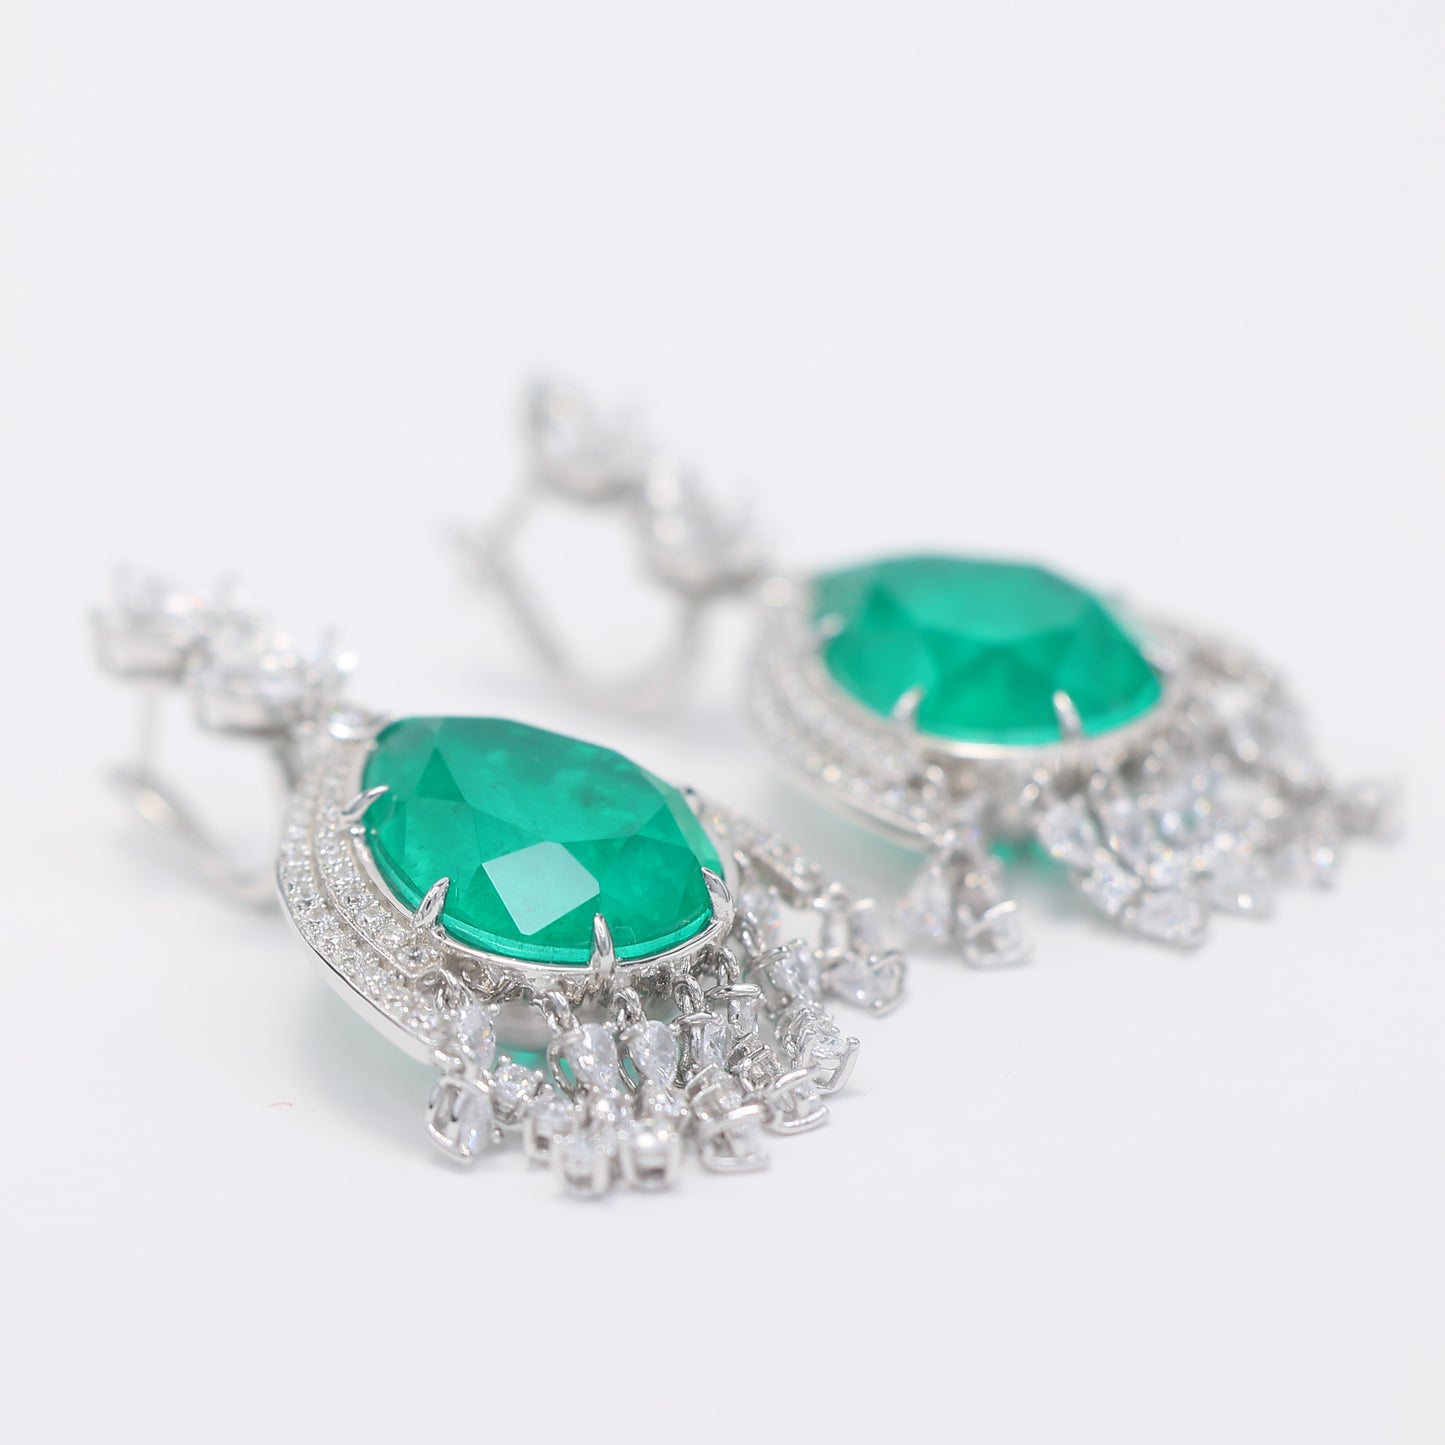 Micro-setting emerald color fancy waterdrop earrings, sterling silver